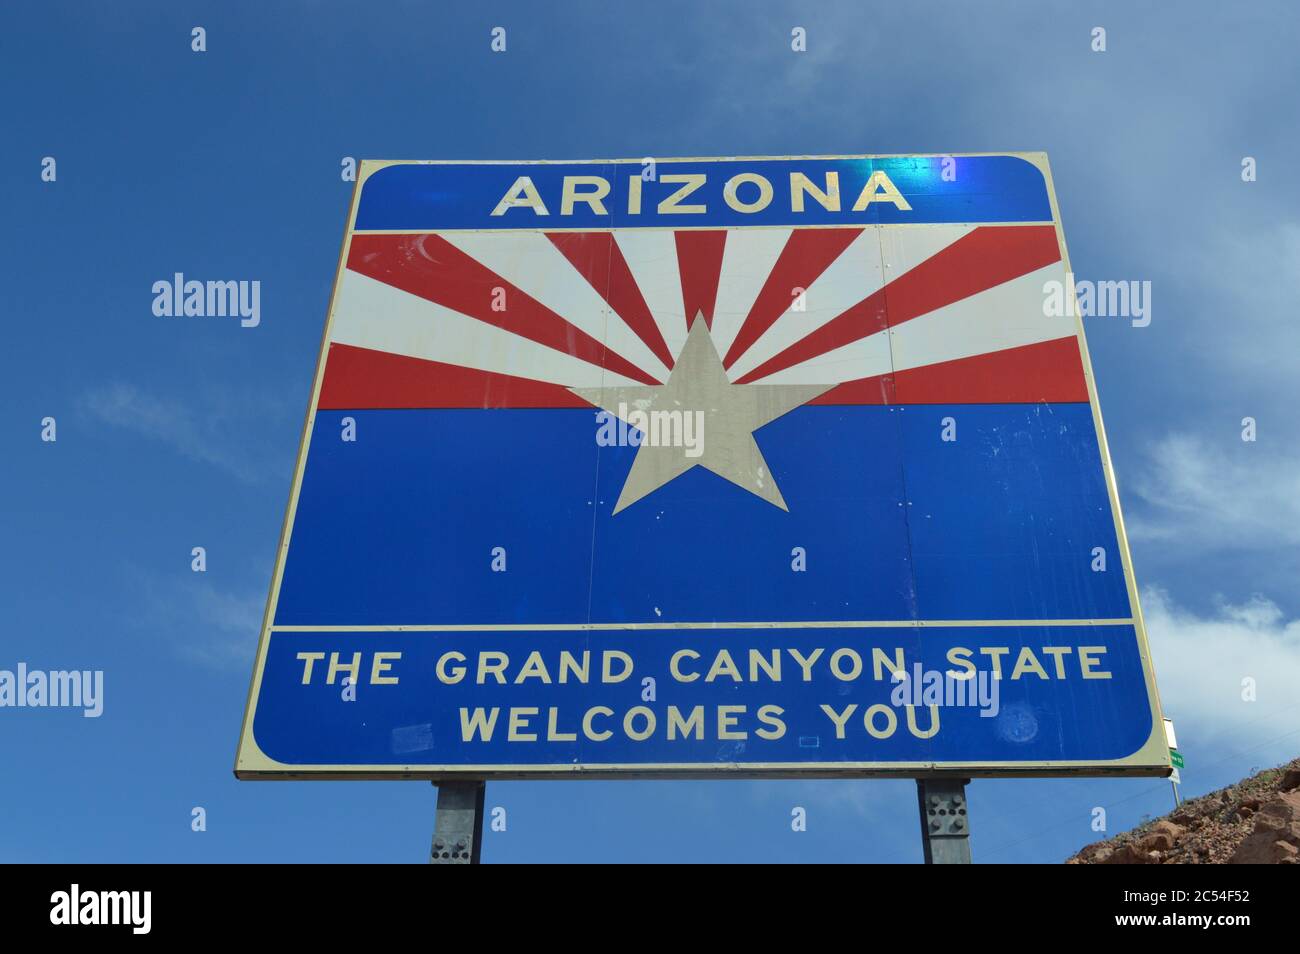 Arizona welcome sign at Hoover Dam, Arizona Stock Photo